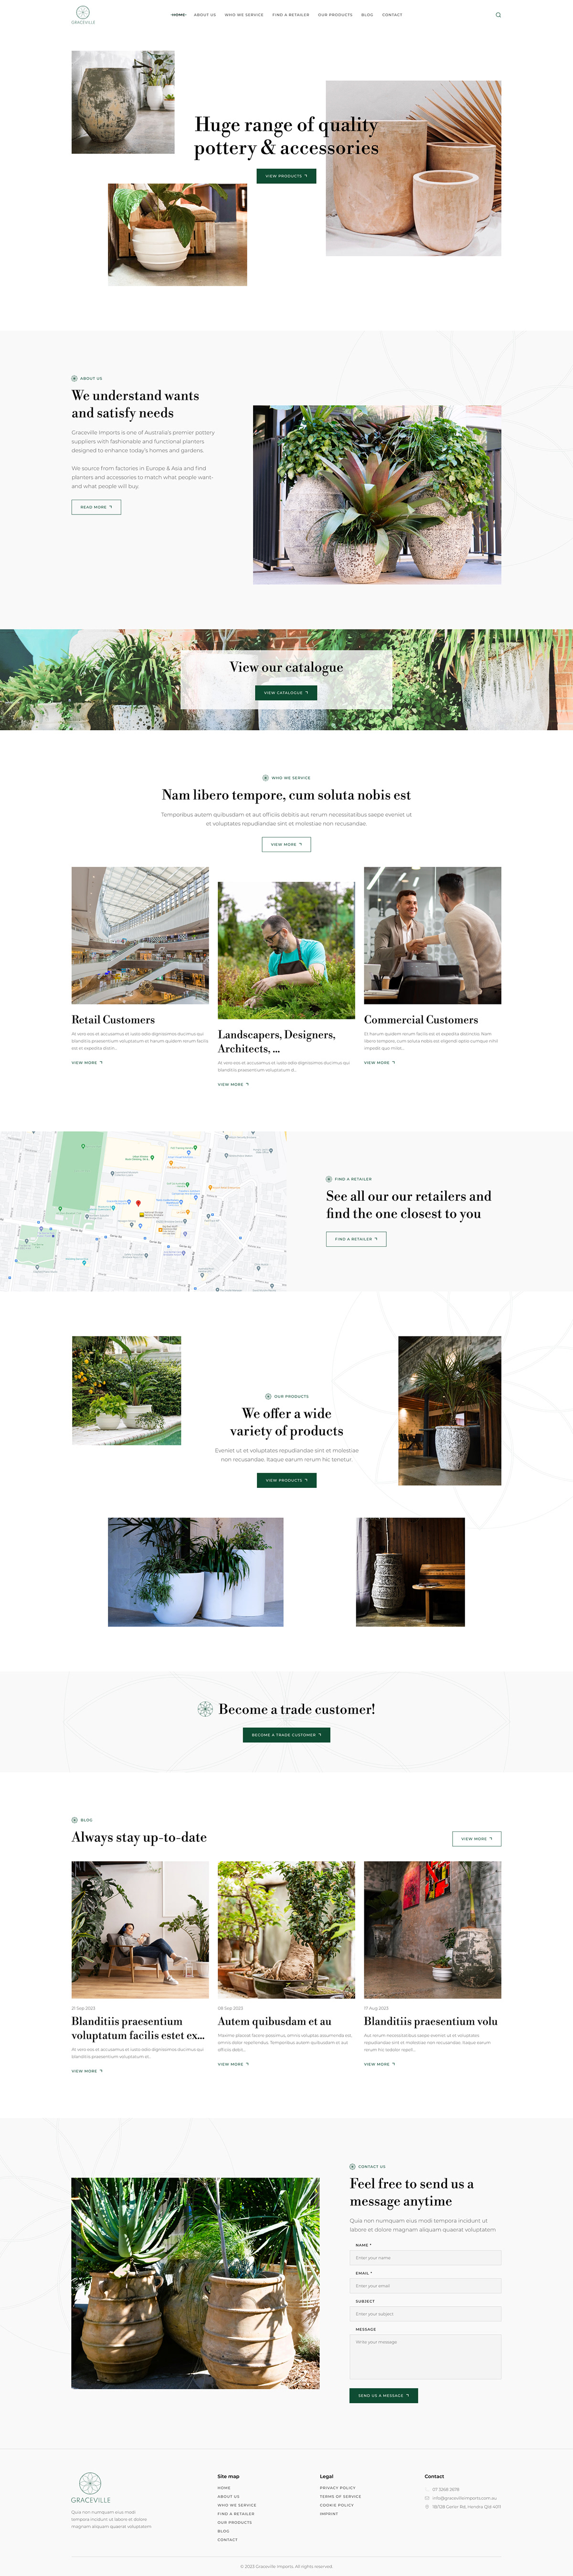 design Web Design  UI/UX Interface homepage Website Pottery Pots plants botanical